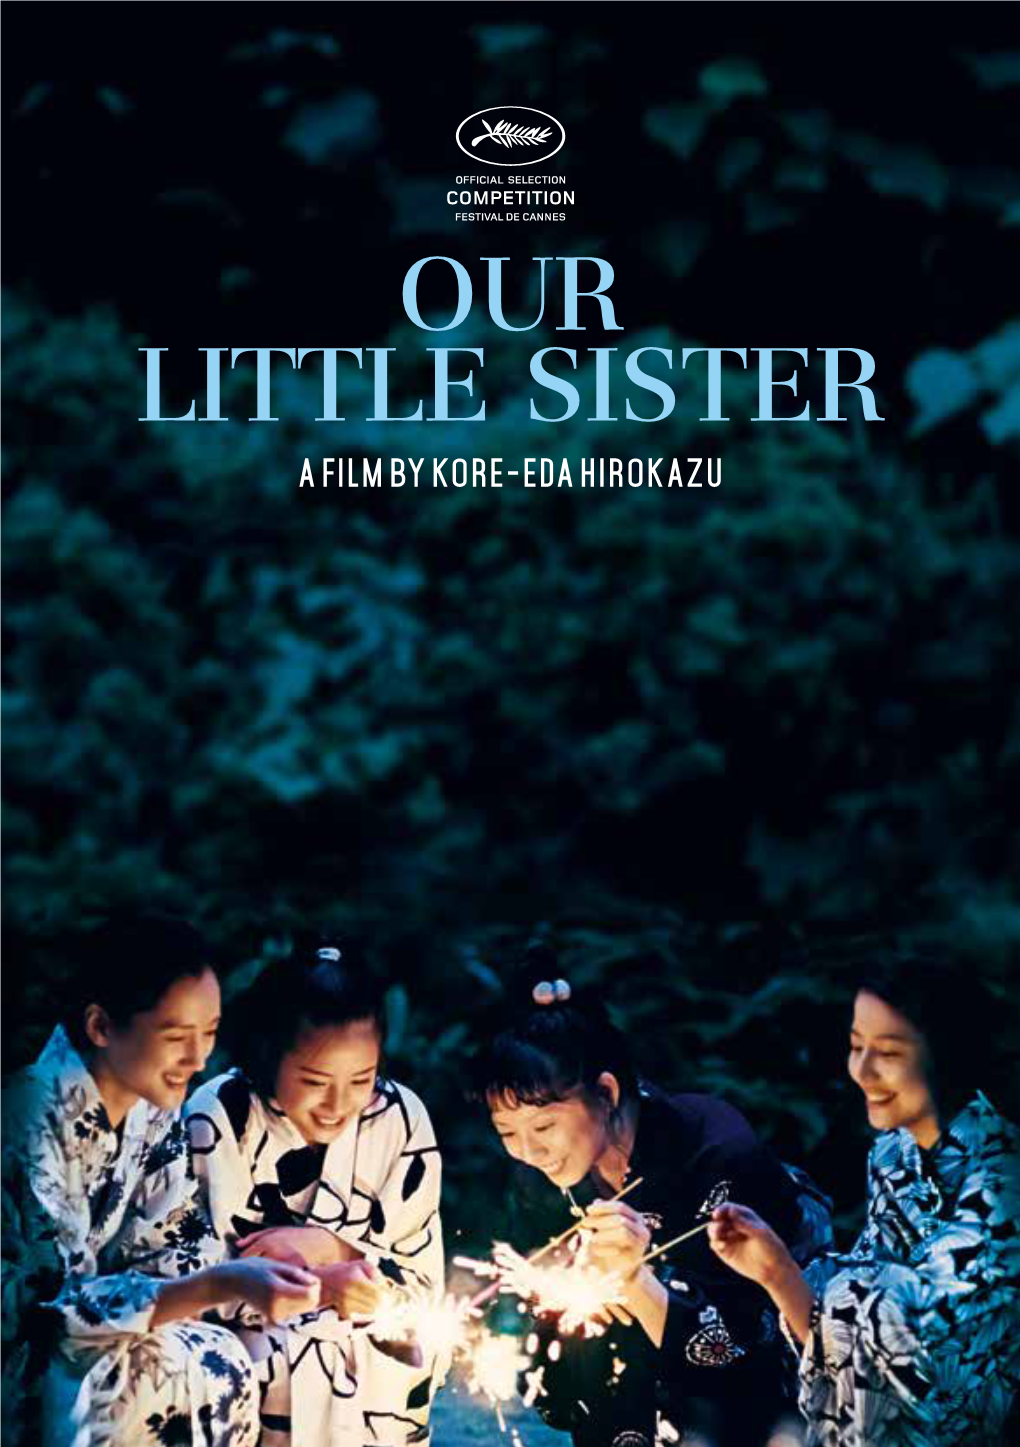 Our Little Sister a Film by Kore-Eda Hirokazu Fuji Television Network Inc., Shogakukan Inc., Toho Co., Ltd